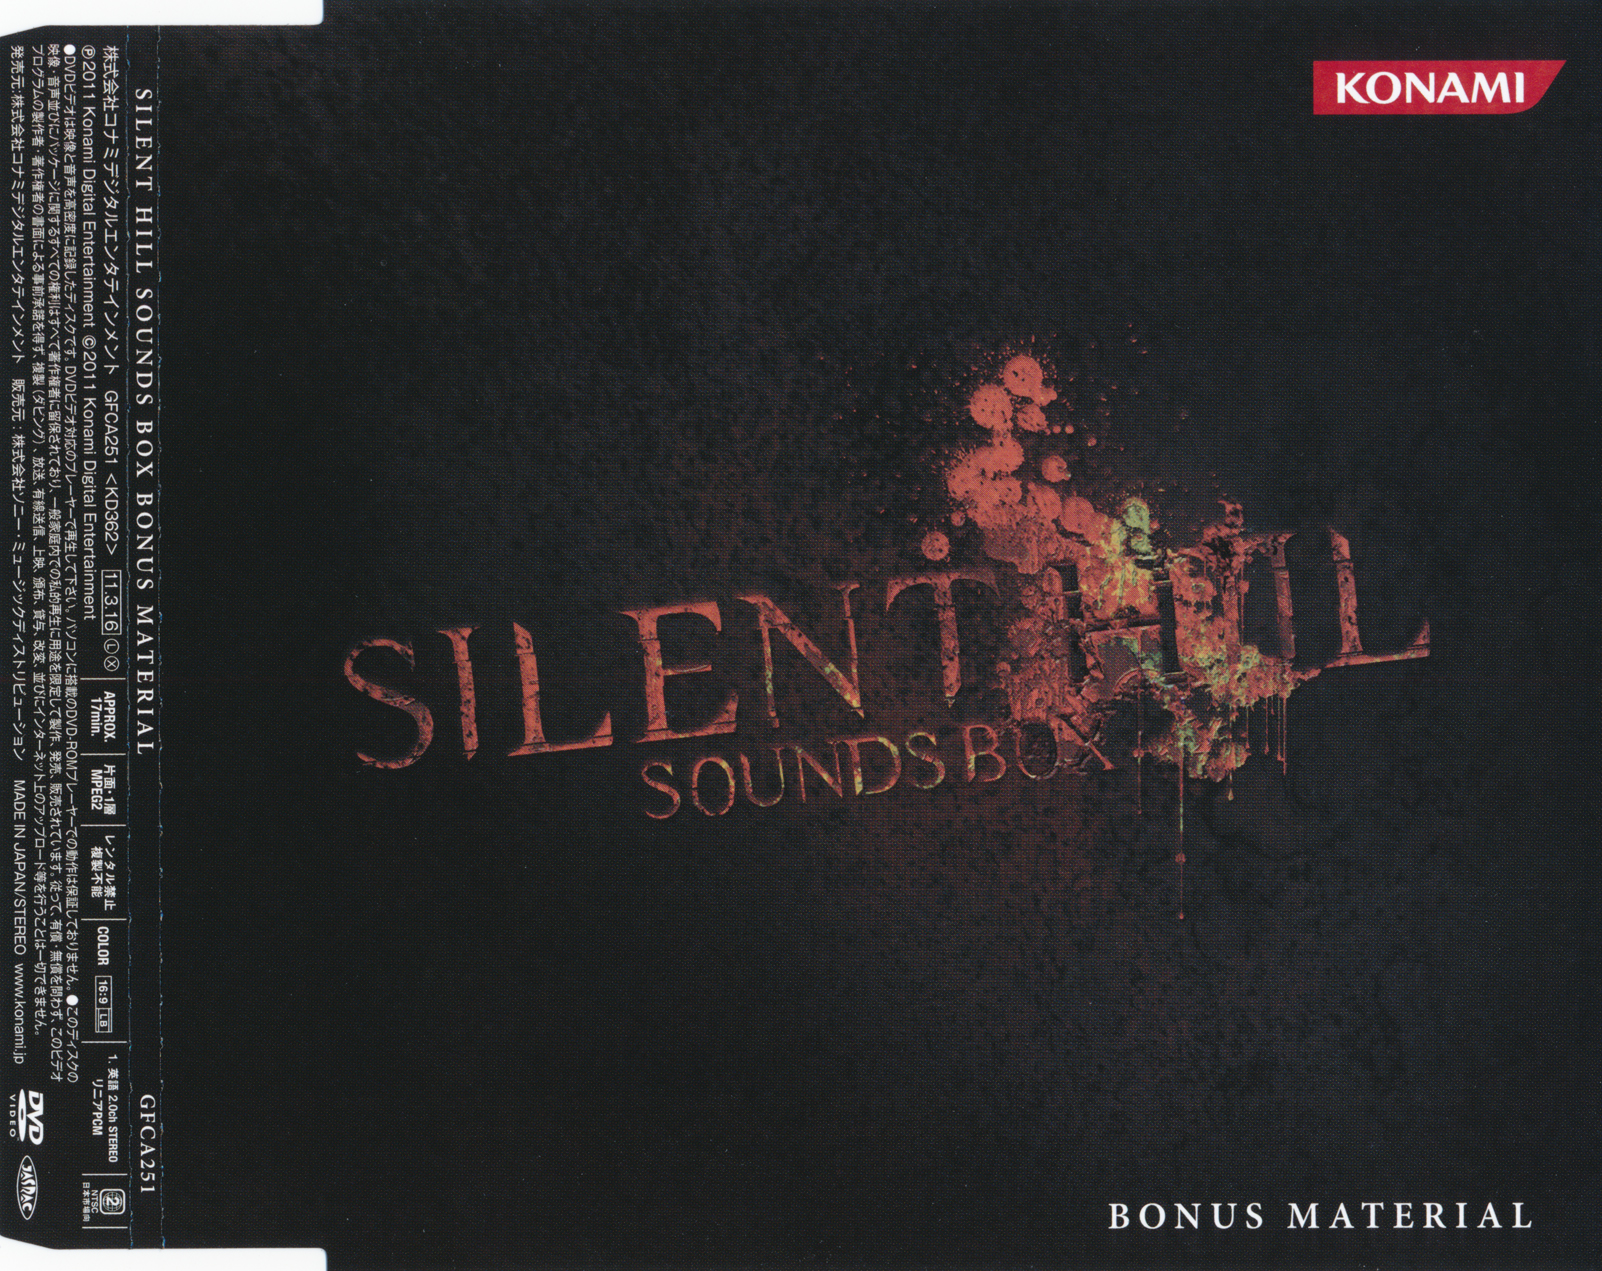 SILENT HILL SOUNDS BOX (2011) MP3